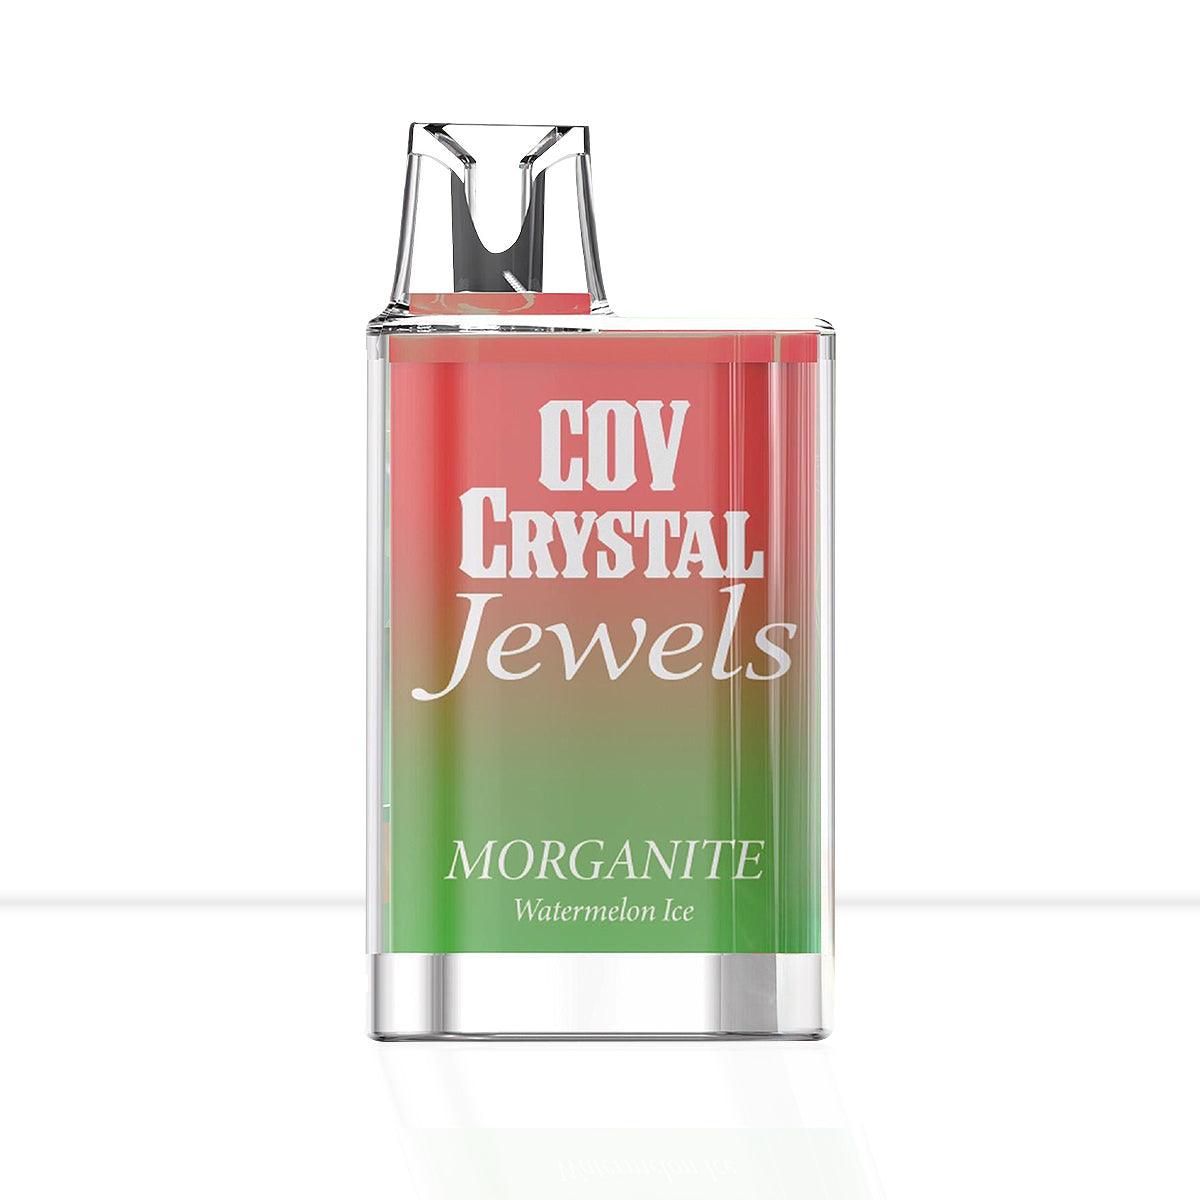 COV Crystal Jewels Watermelon Ice Morganite Disposable - Vape Kits